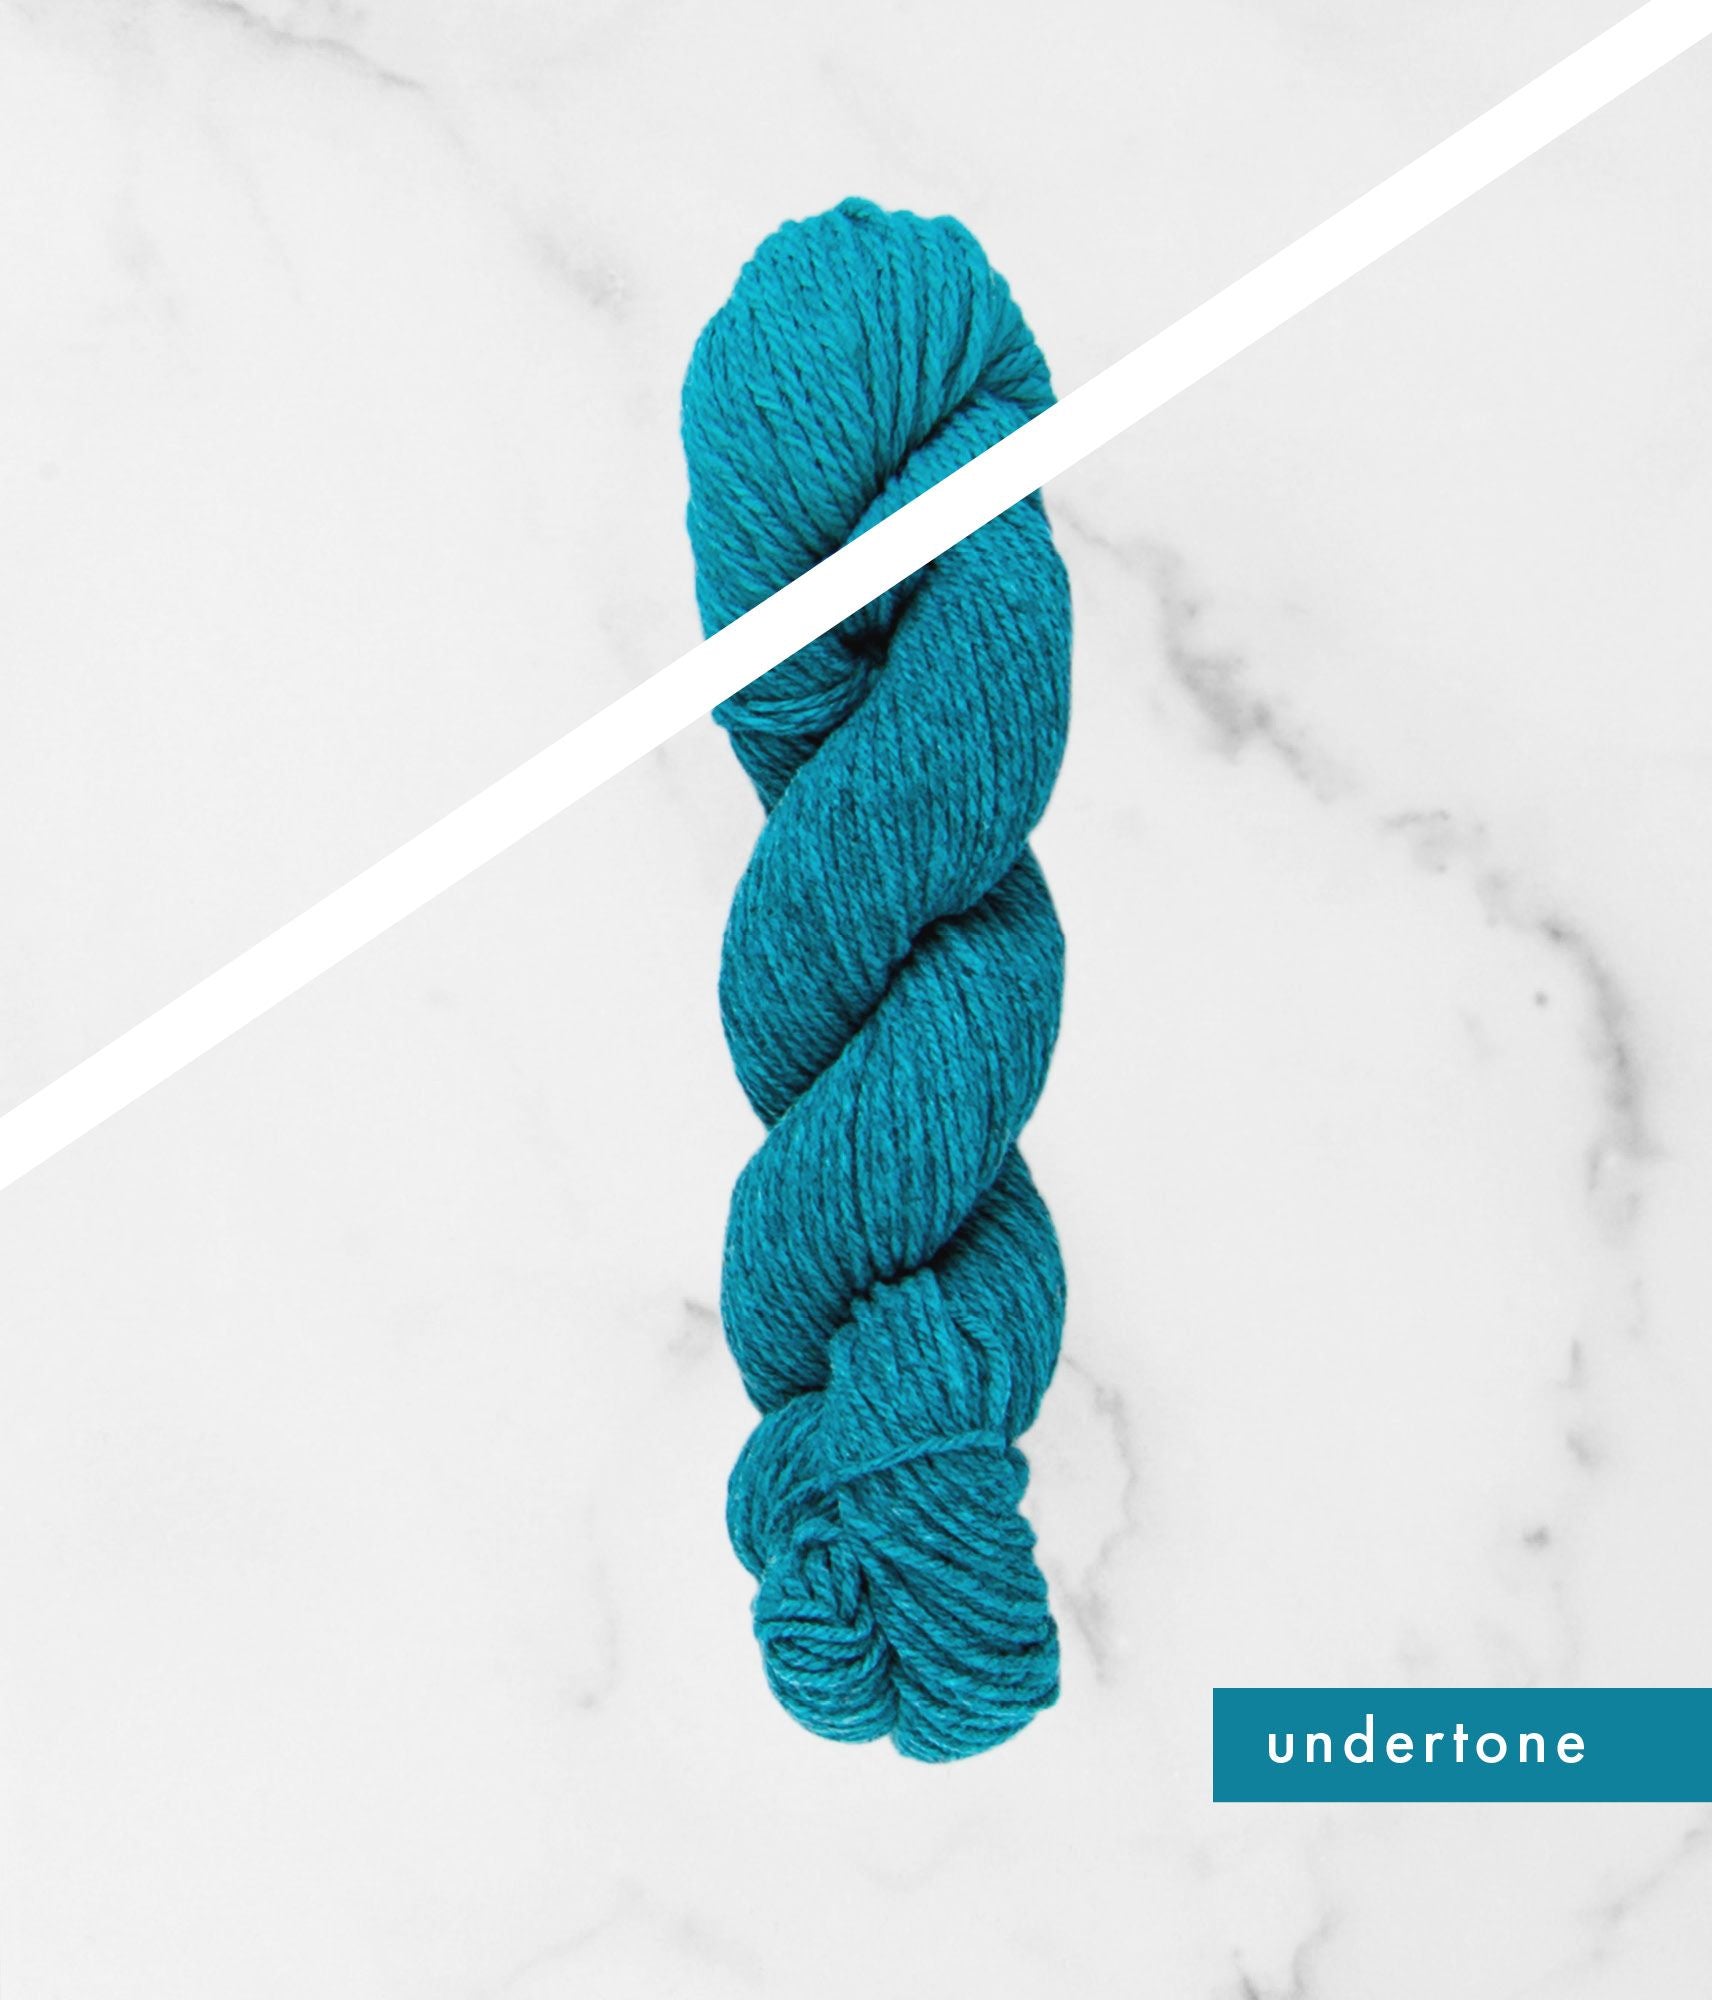 Teal overtone and undertone BT Tones hanks of yarn